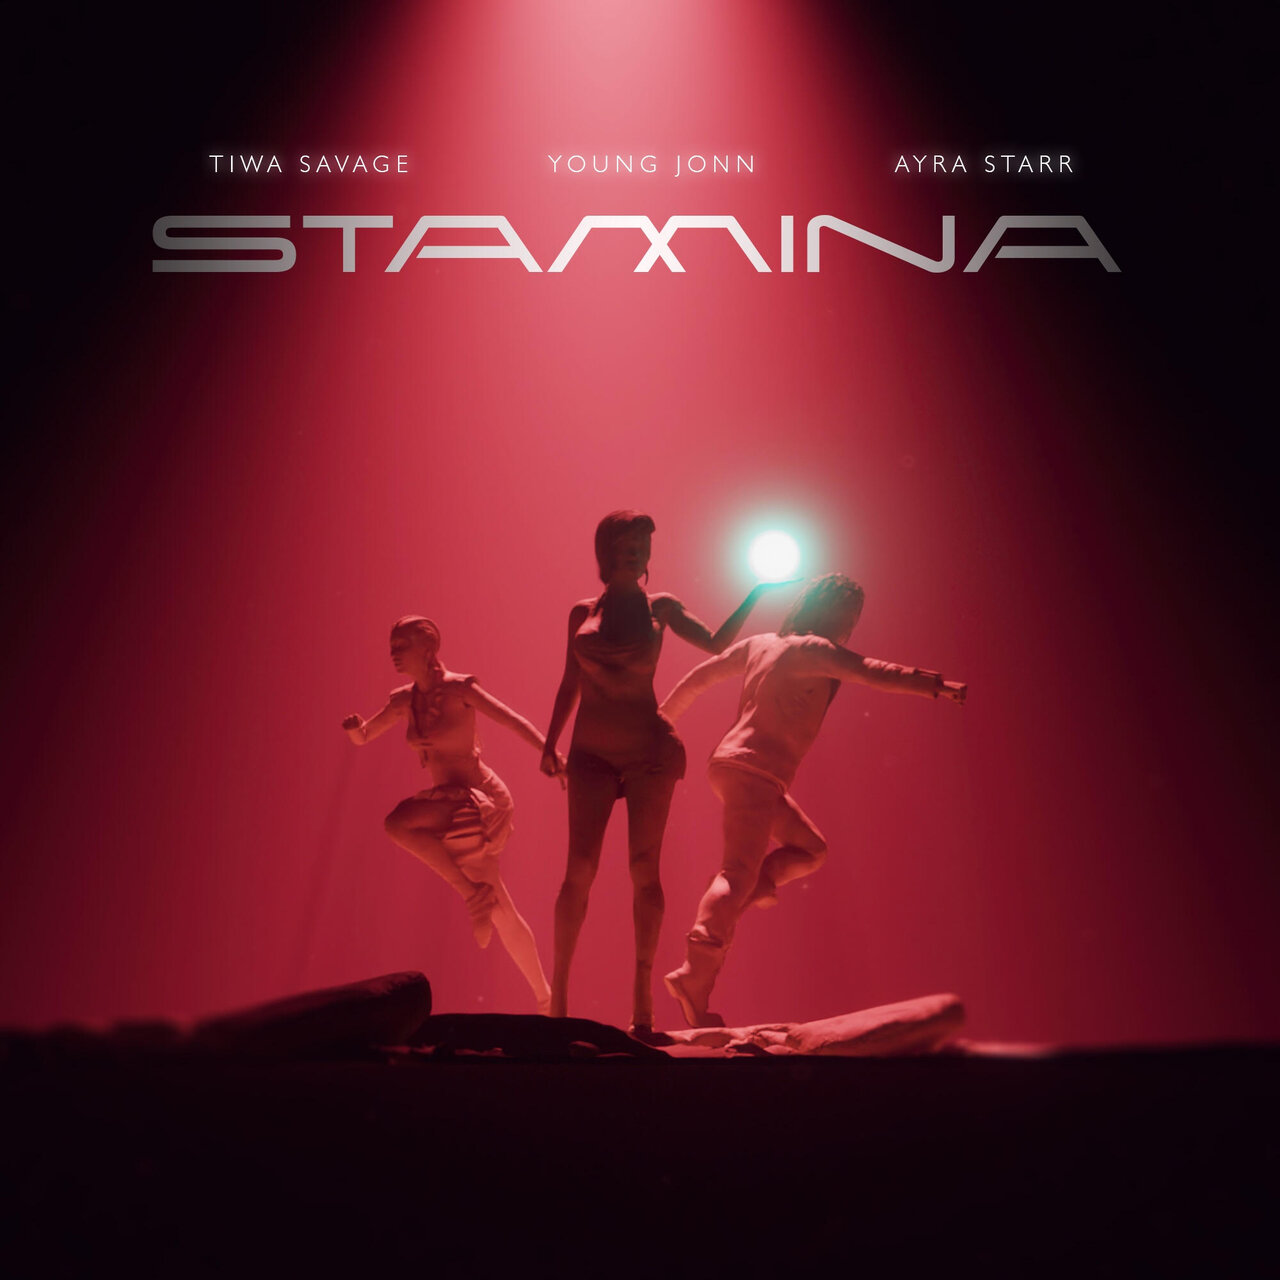 Tiwa Savage - Stamina (ft. Young John and Ayra Starr) (Cover)